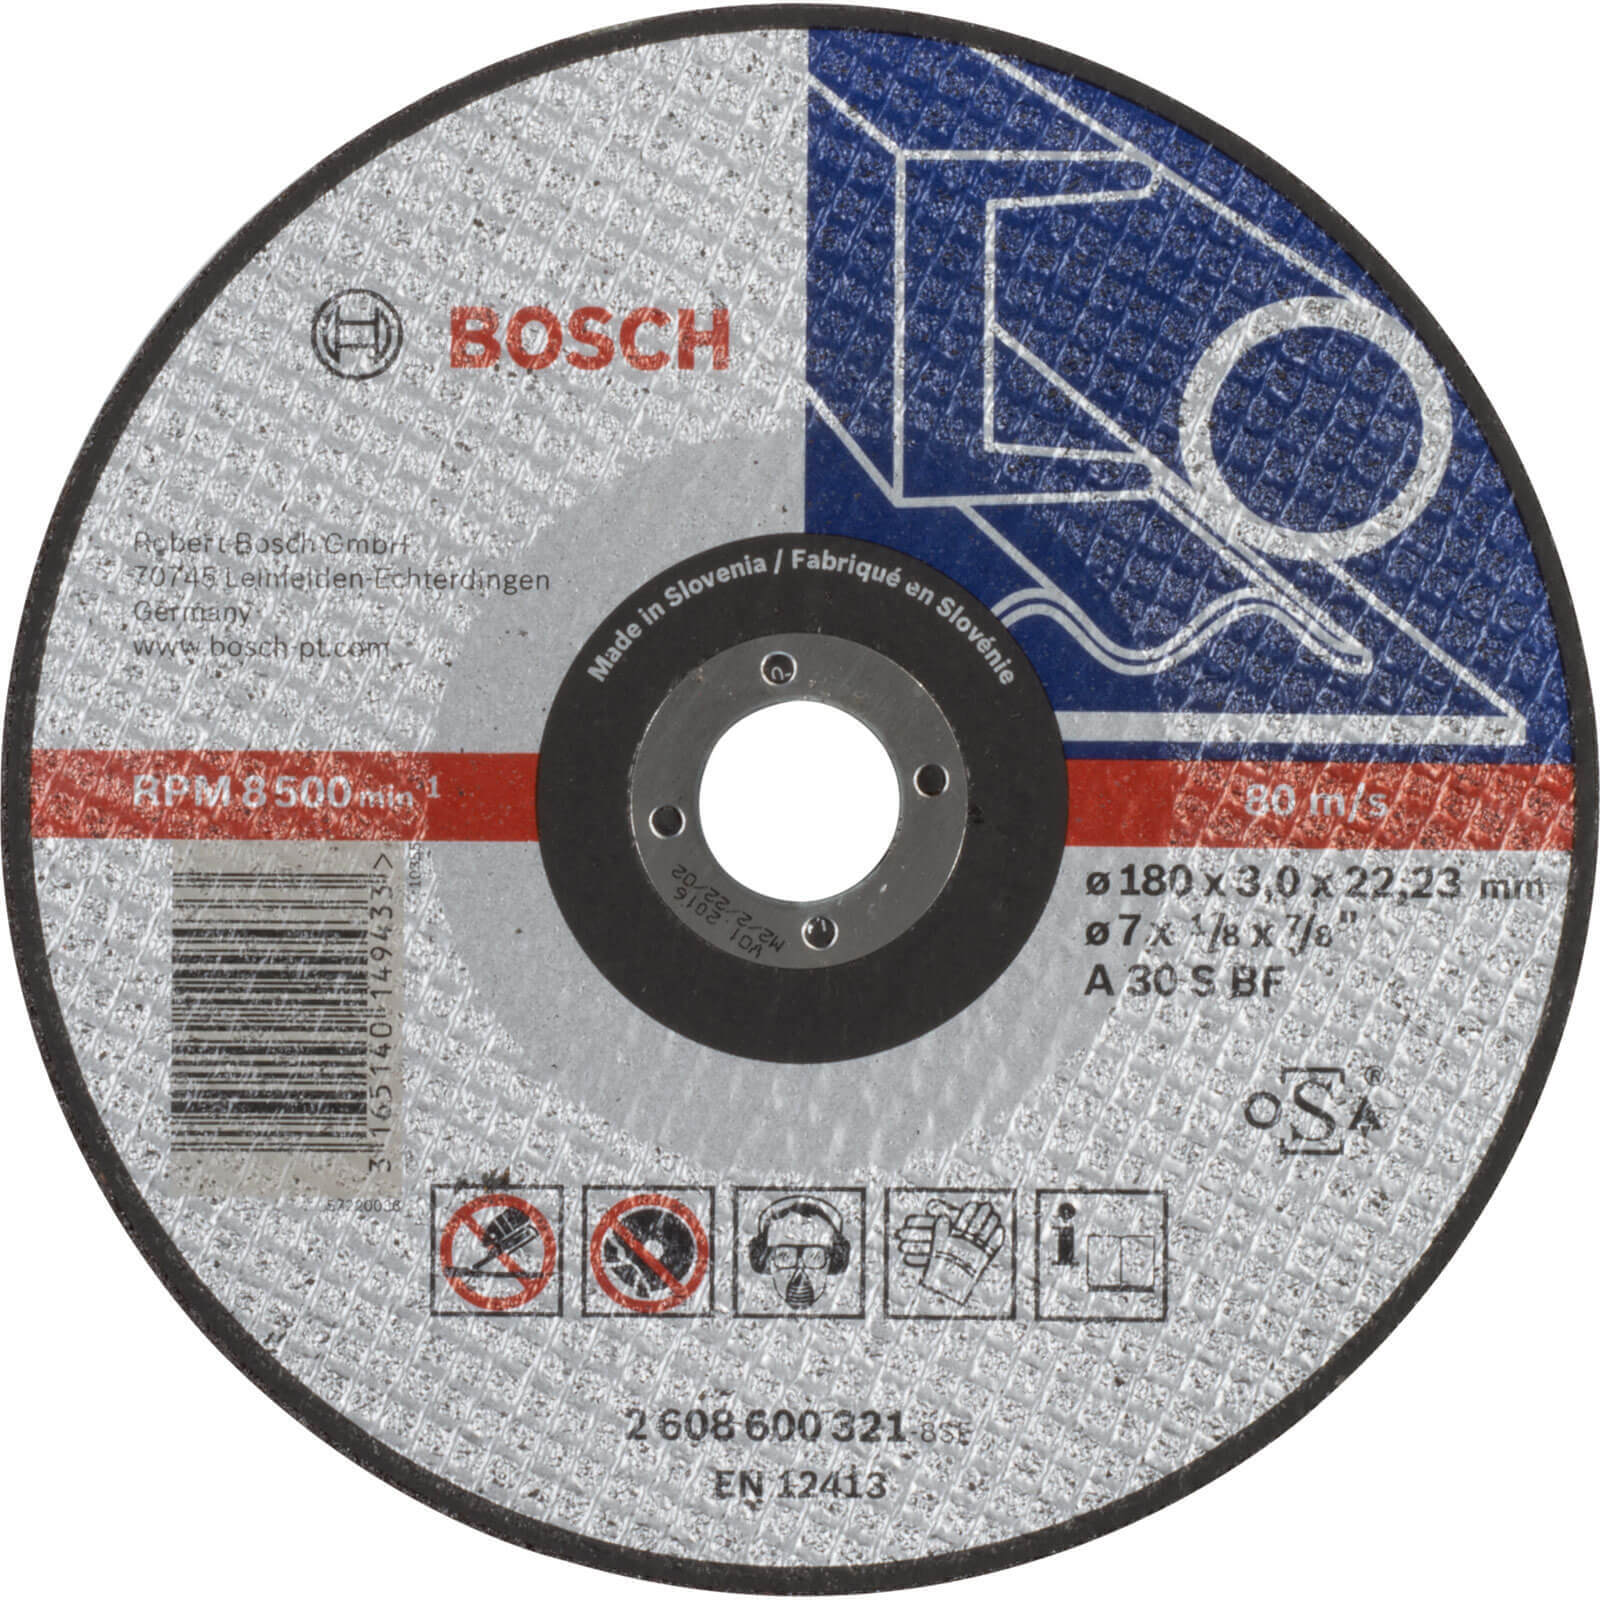 Image of Bosch Expert A30S BF Flat Metal Cutting Disc 180mm